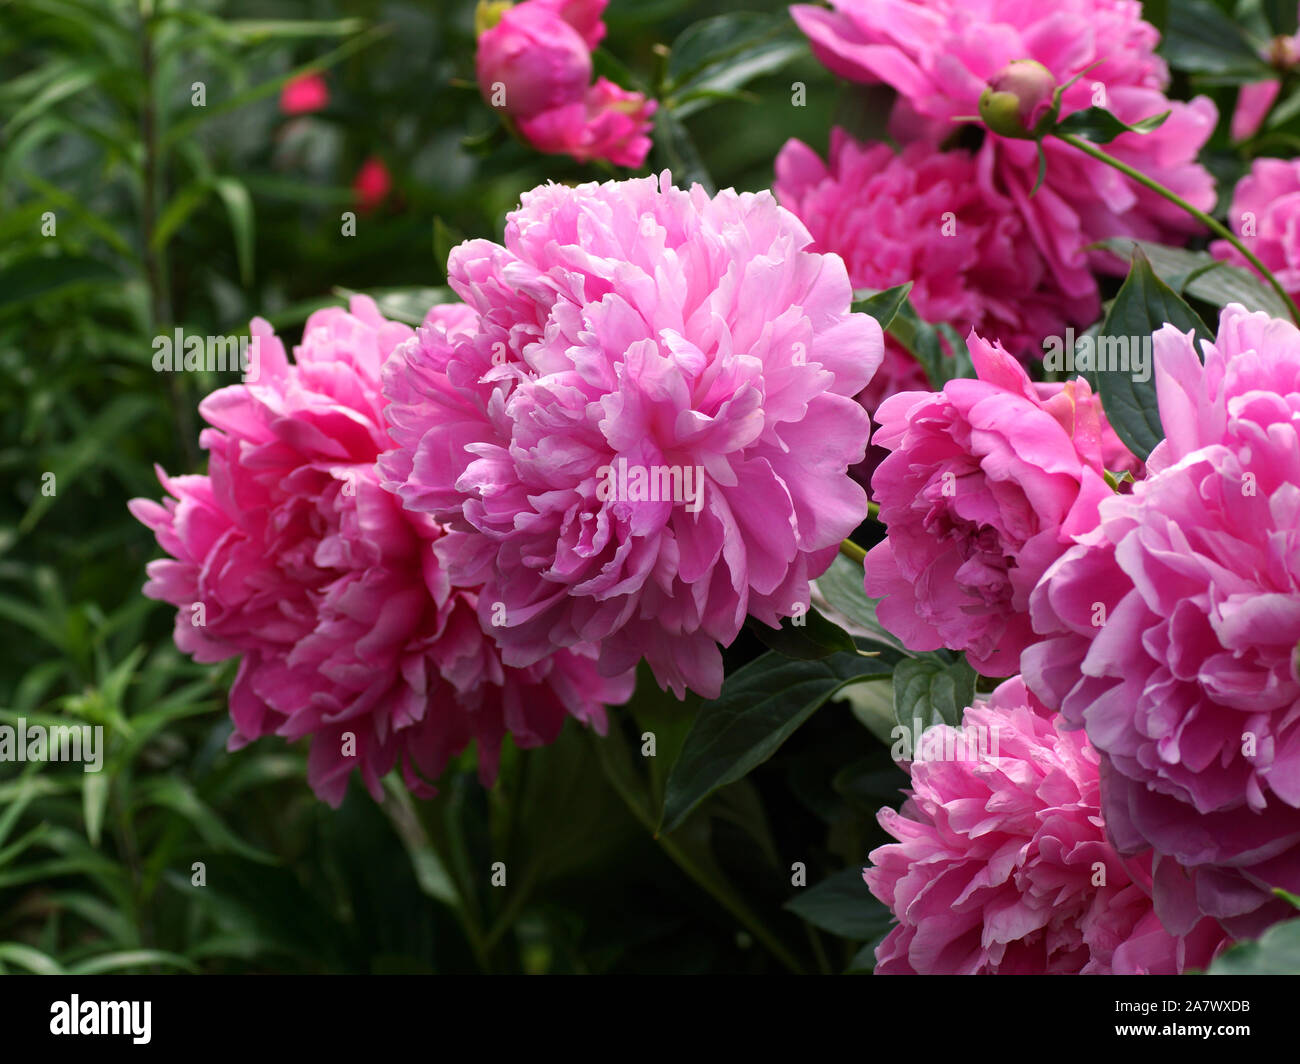 Paeonia Princess Margaret. Doble rosa peonía. Paeonia lactiflora (Chino o peonía peonía jardín común). Hermosa rosa peonías. Foto de stock